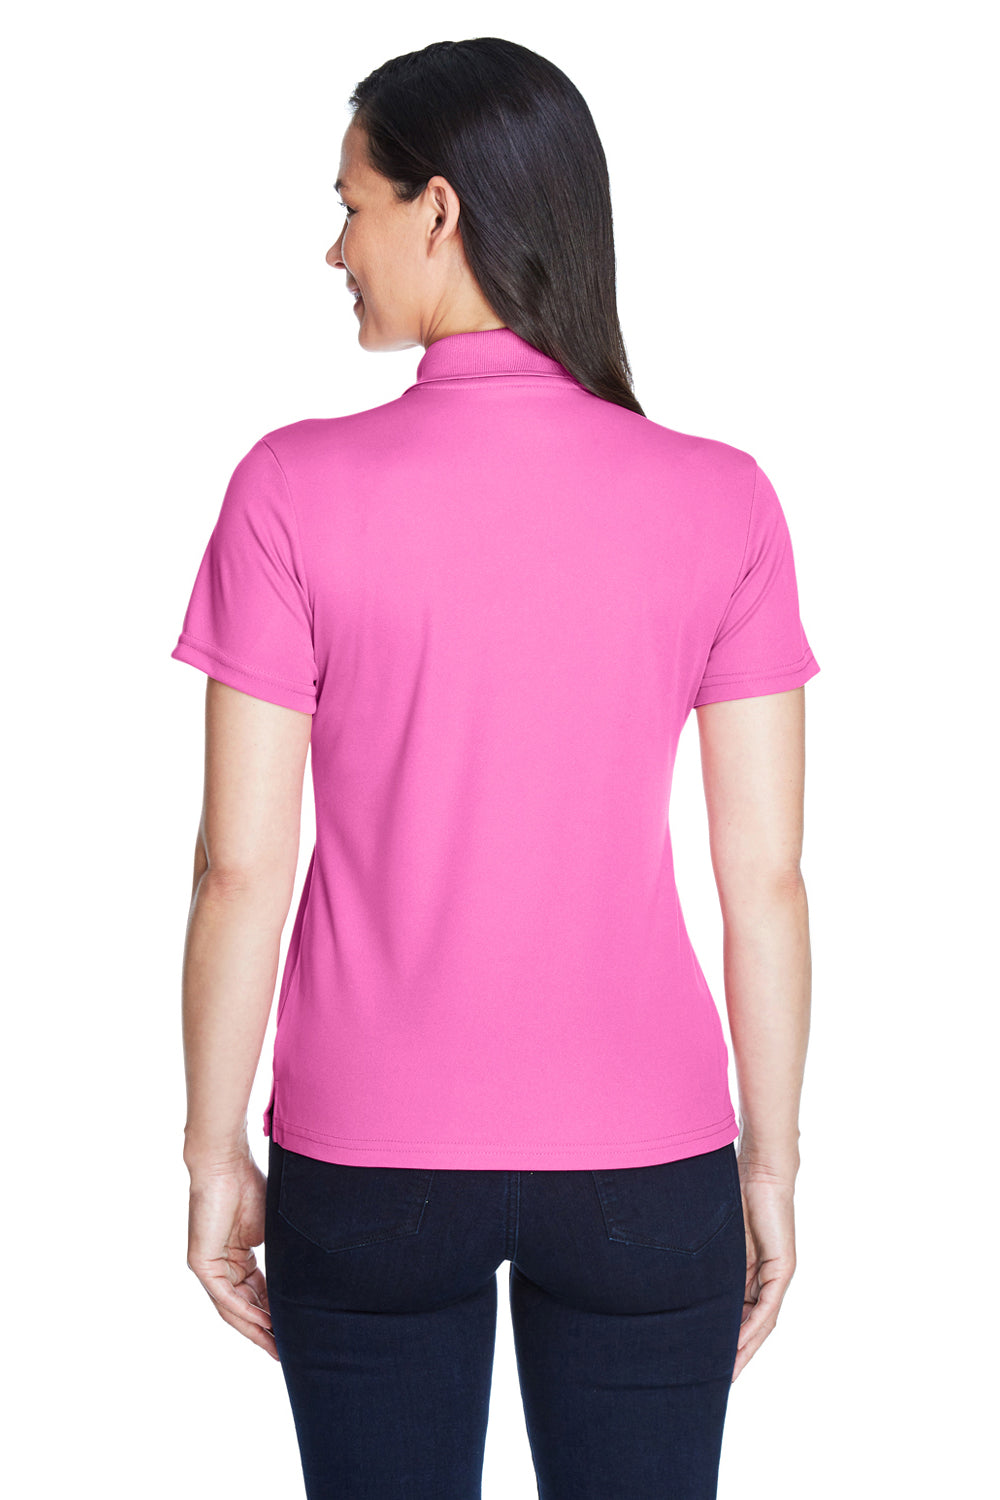 Core 365 78181 Womens Origin Performance Moisture Wicking Short Sleeve Polo Shirt Charity Pink Back